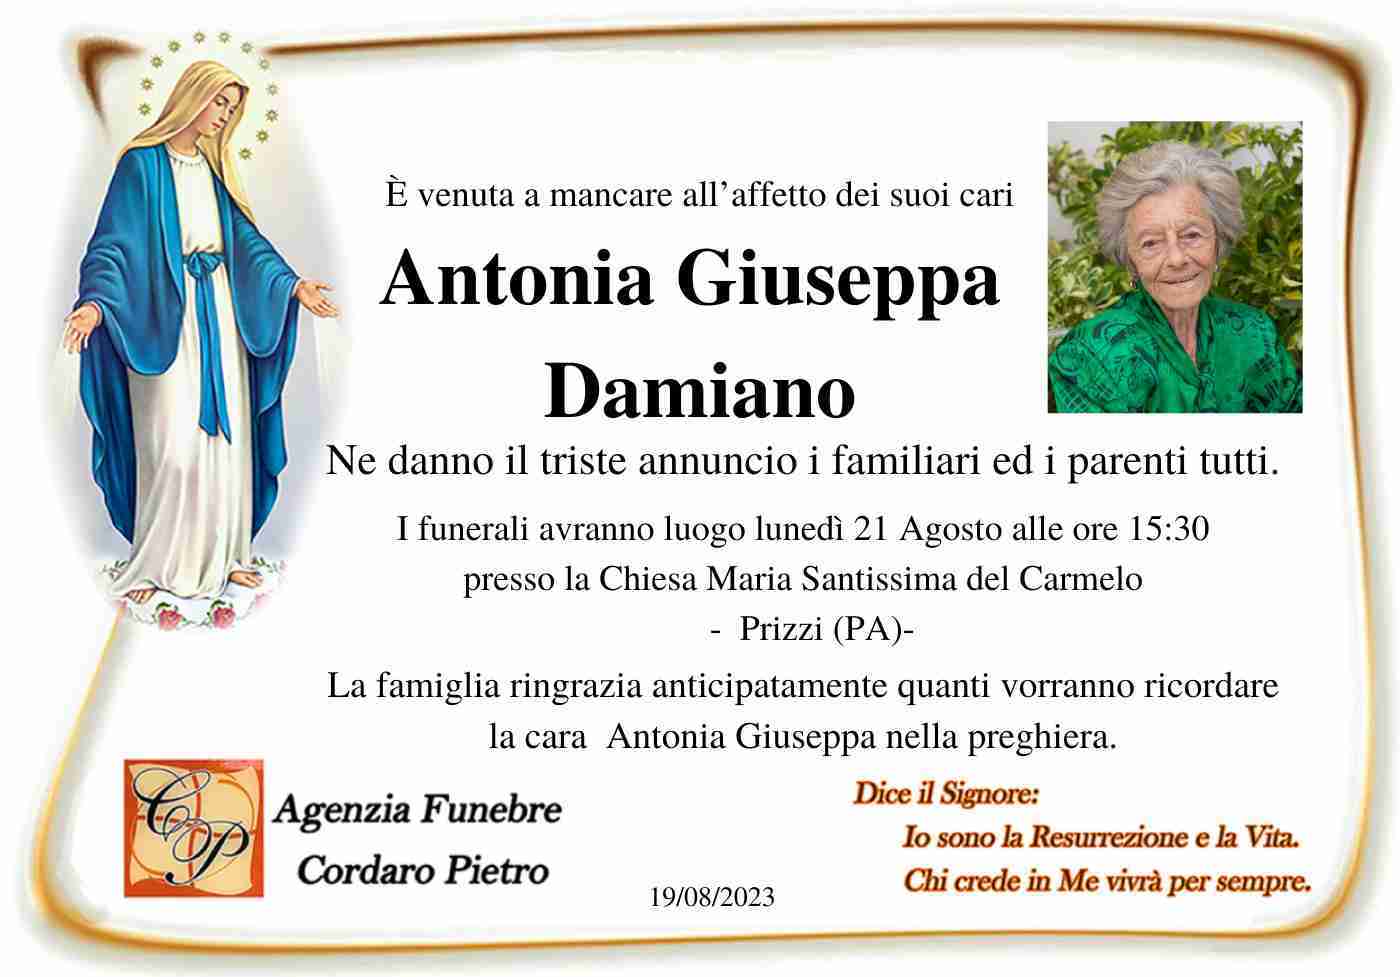 Antonia Giuseppa Damiano